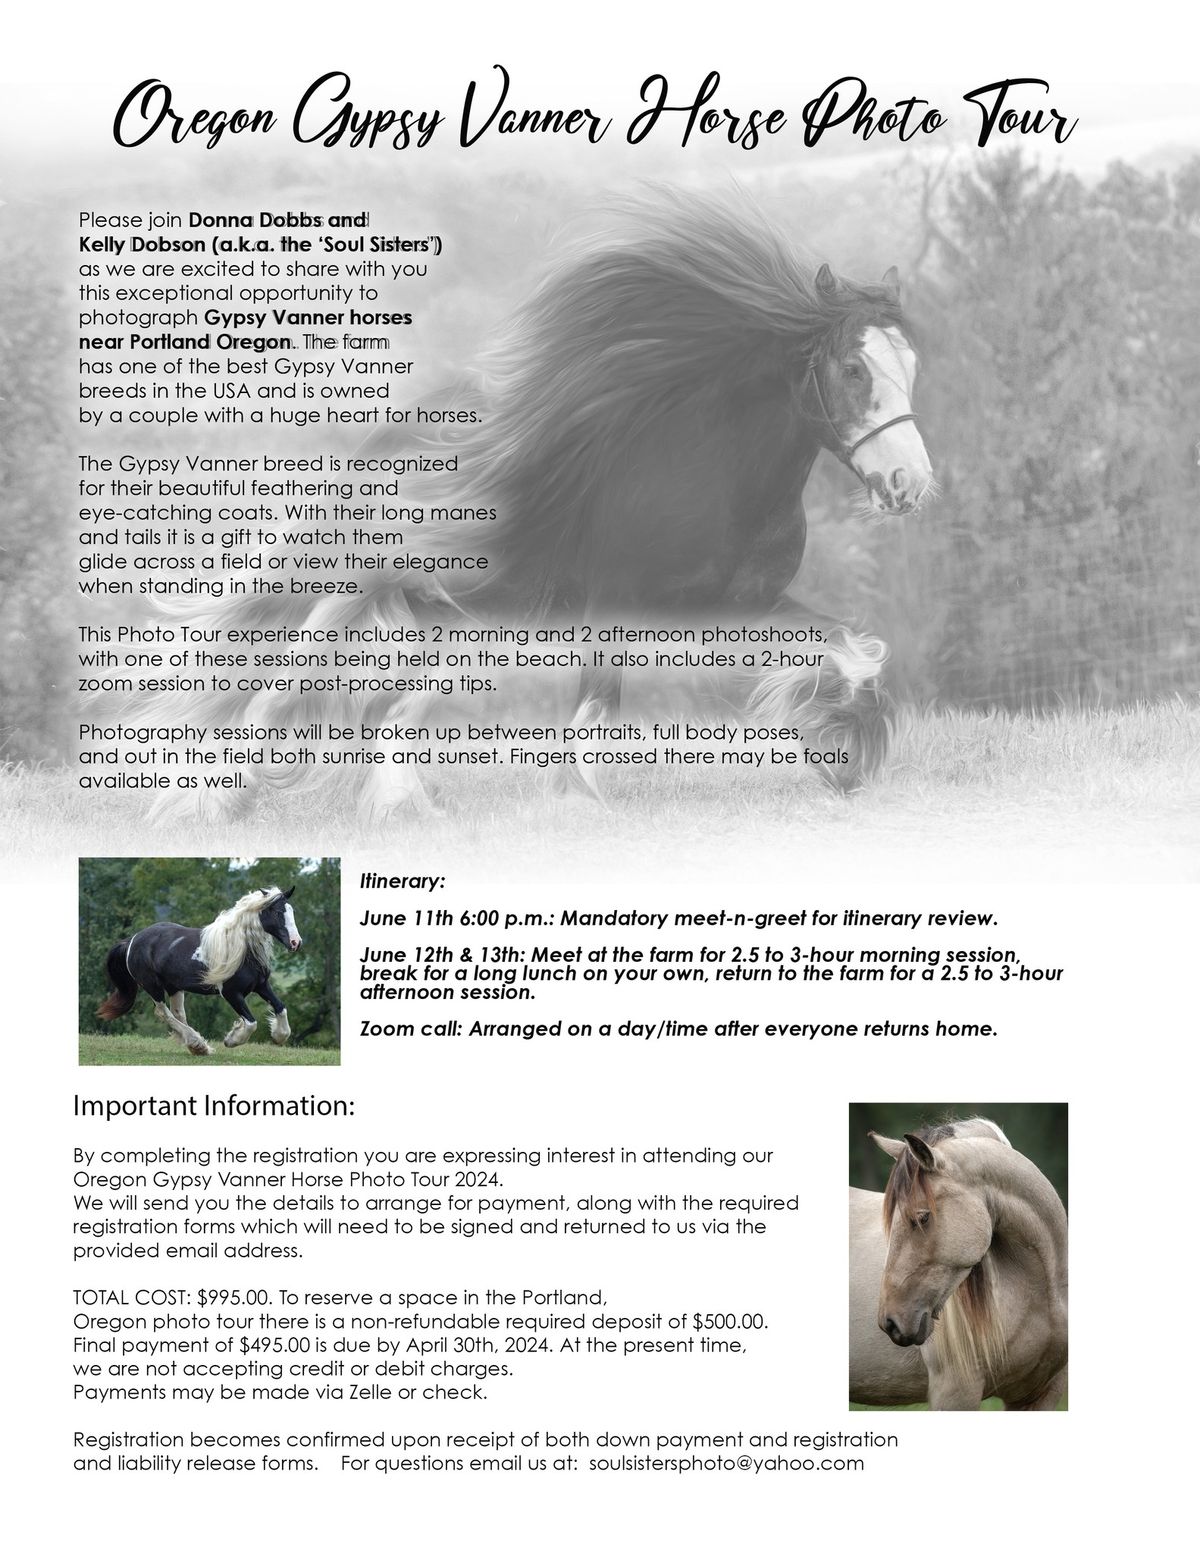 Oregon Gypsy Vanner Horse Photo Tour. $995.00